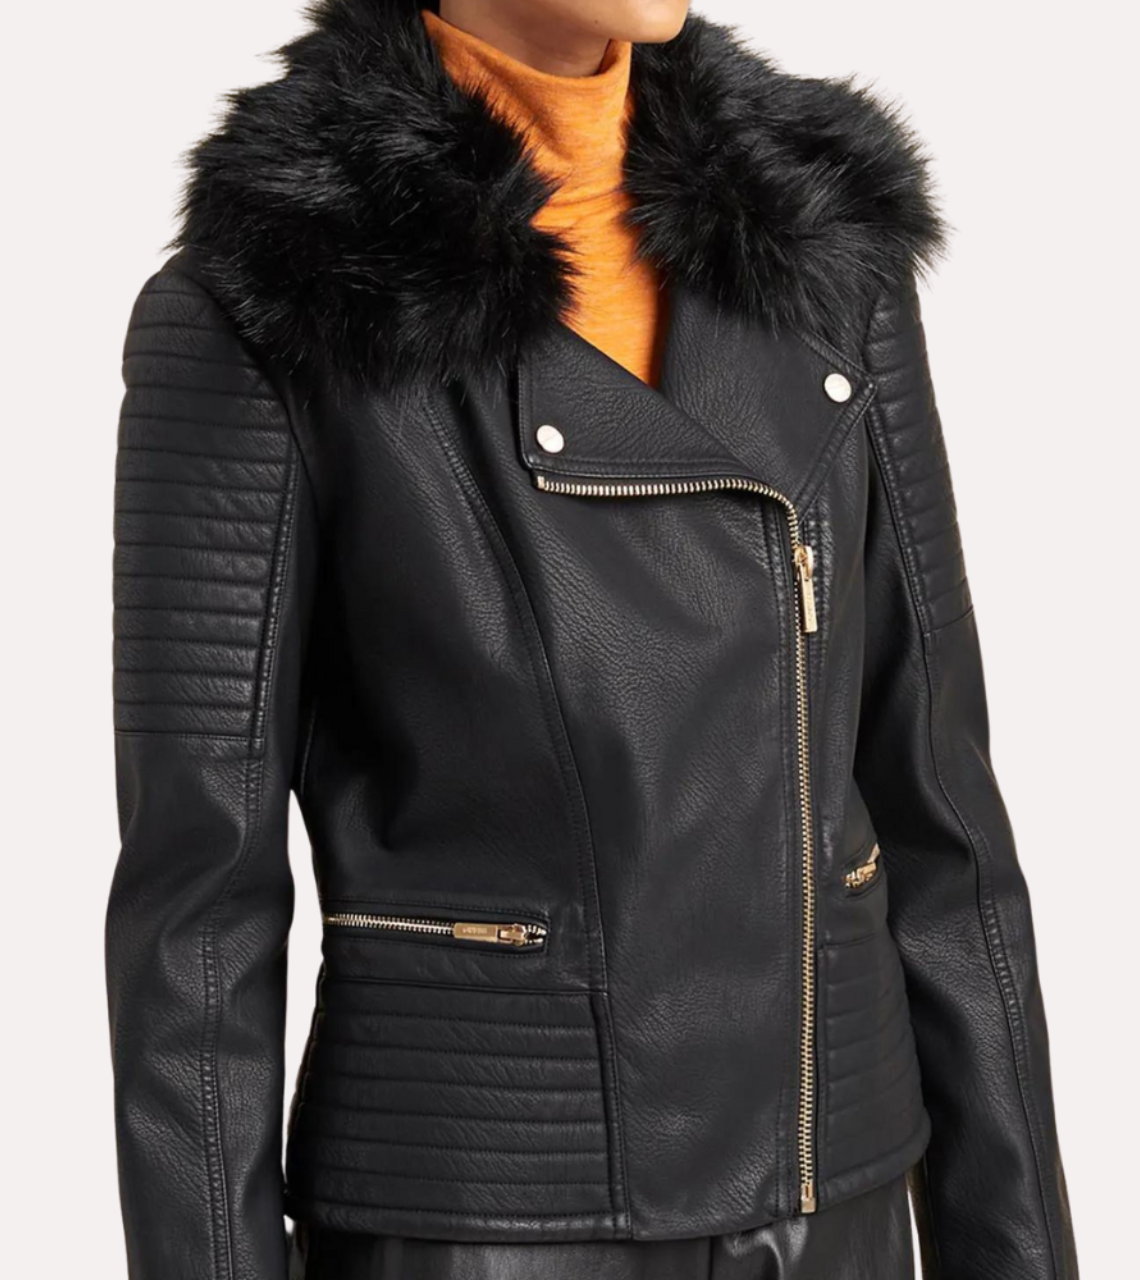 Fur Collar Shearling Leather Jacket Zipper